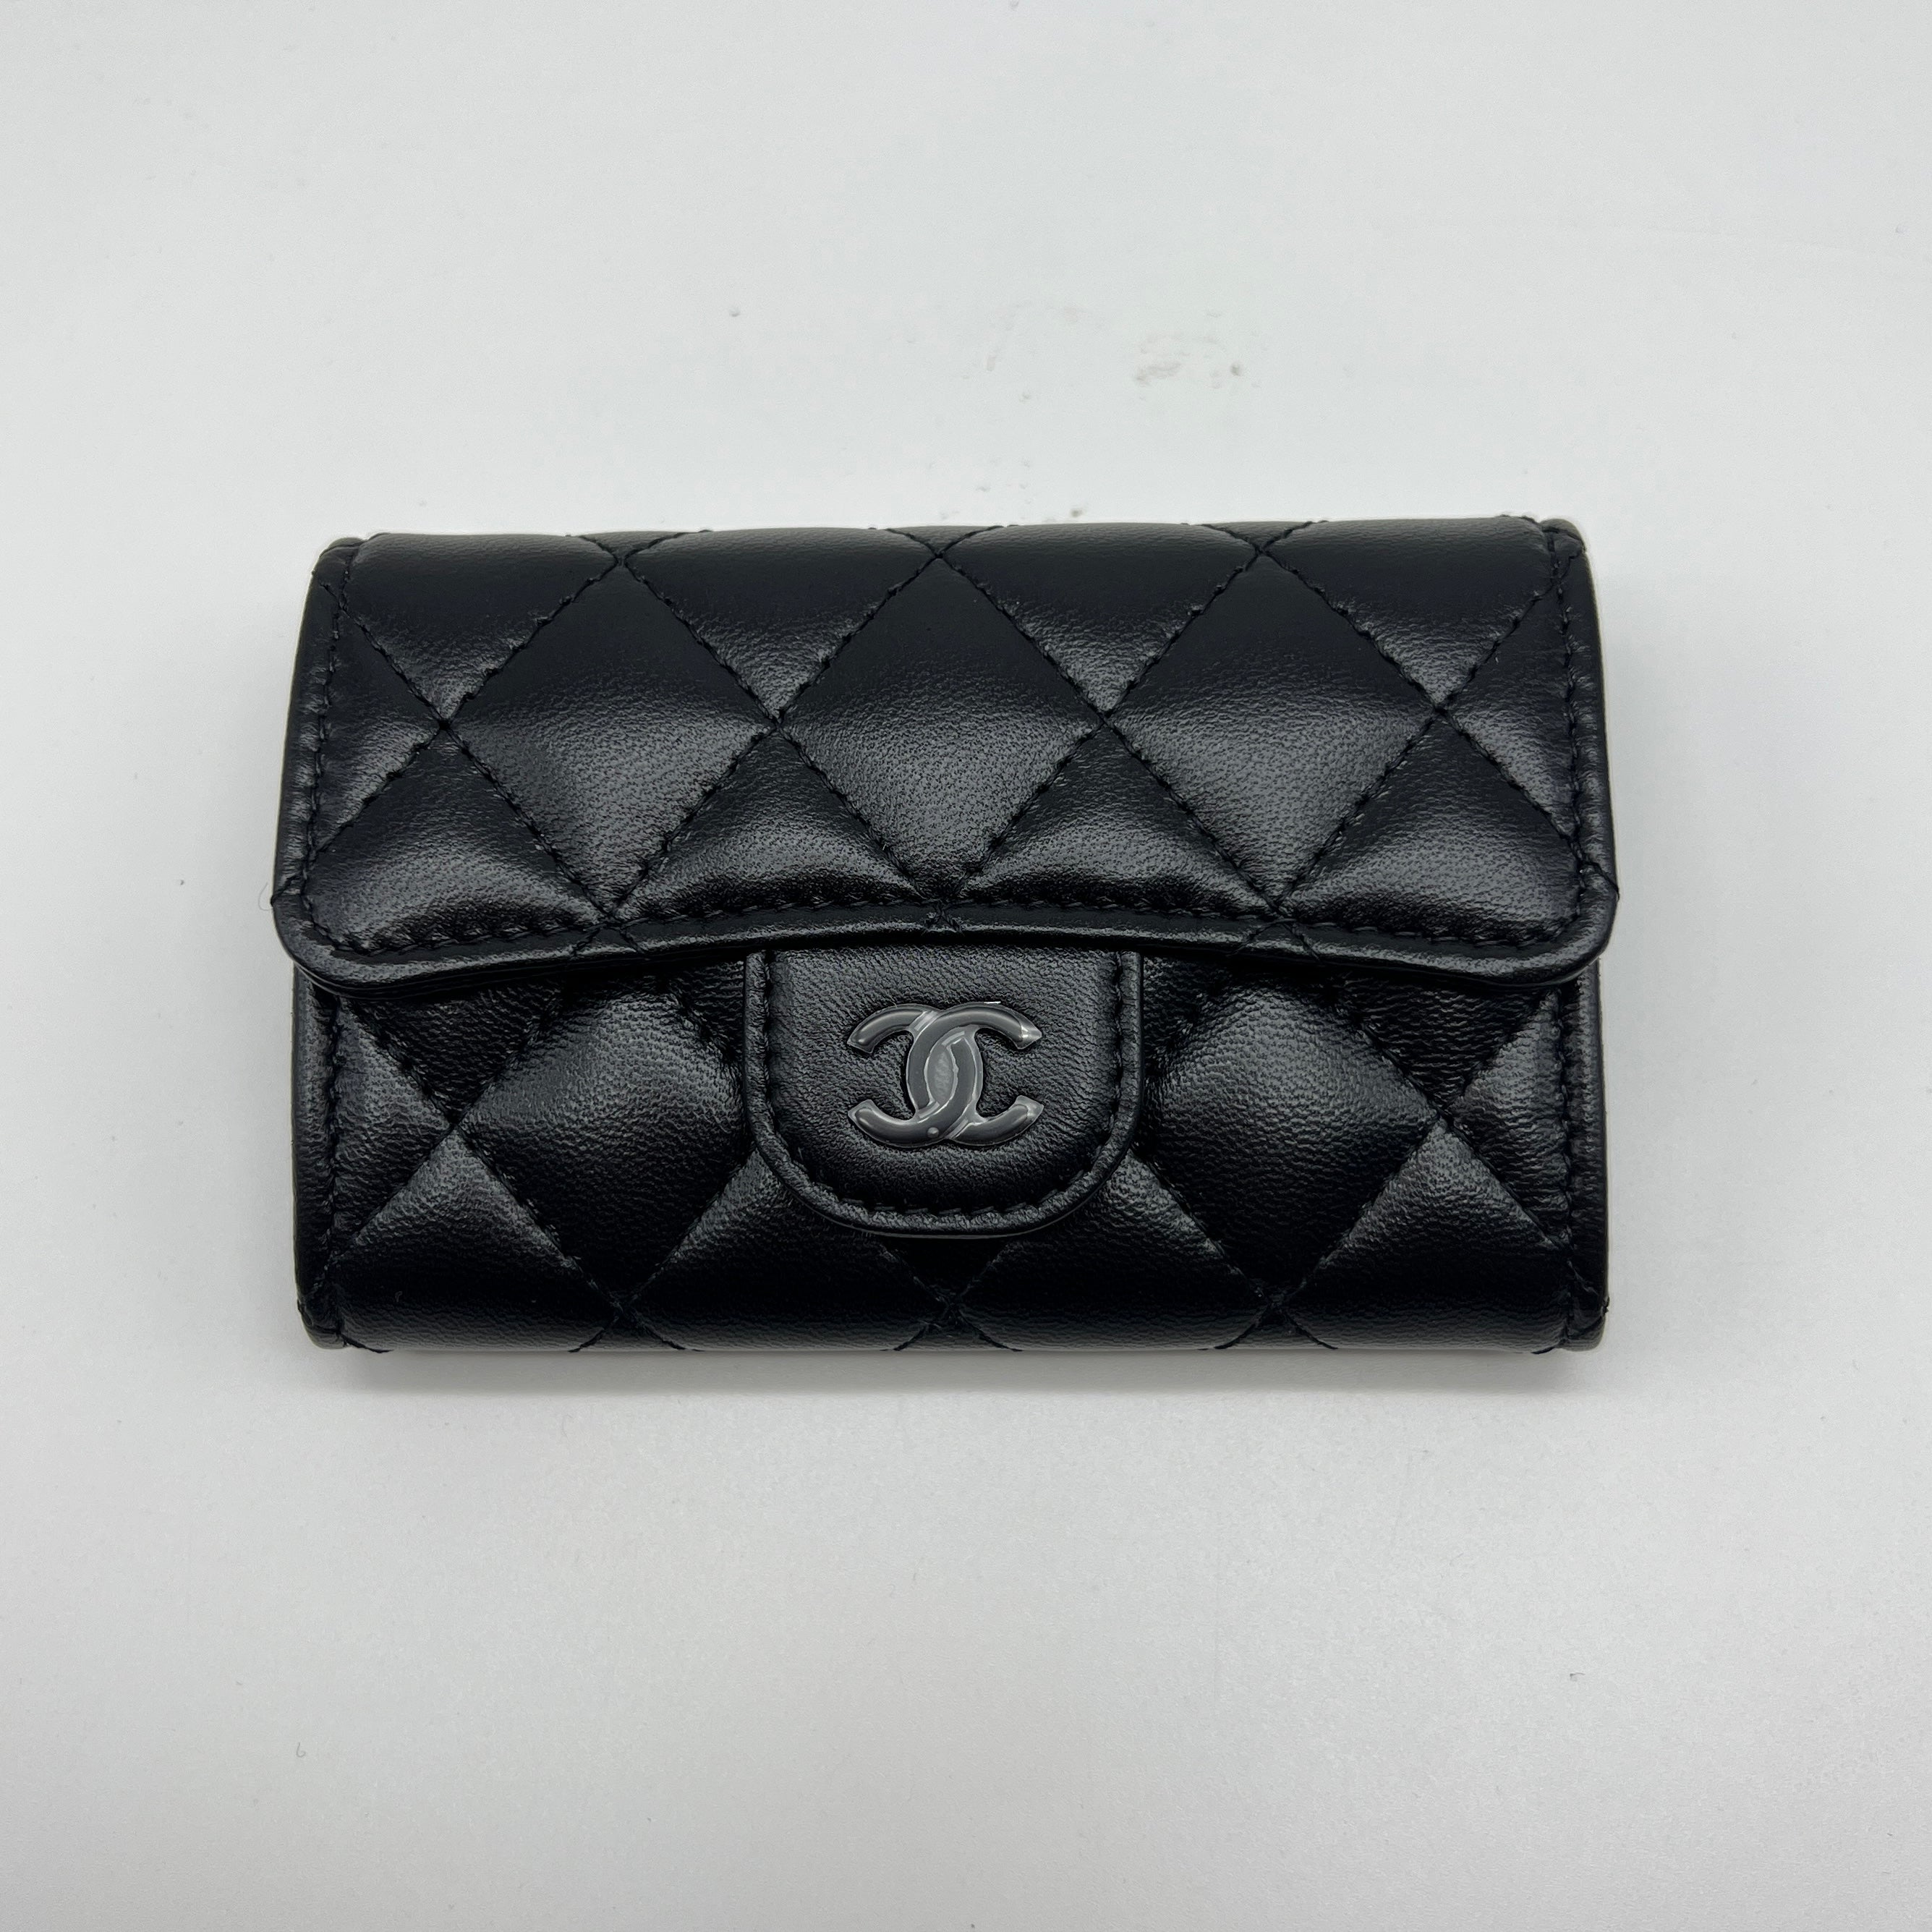 香港現貨 - Chanel 經典卡包